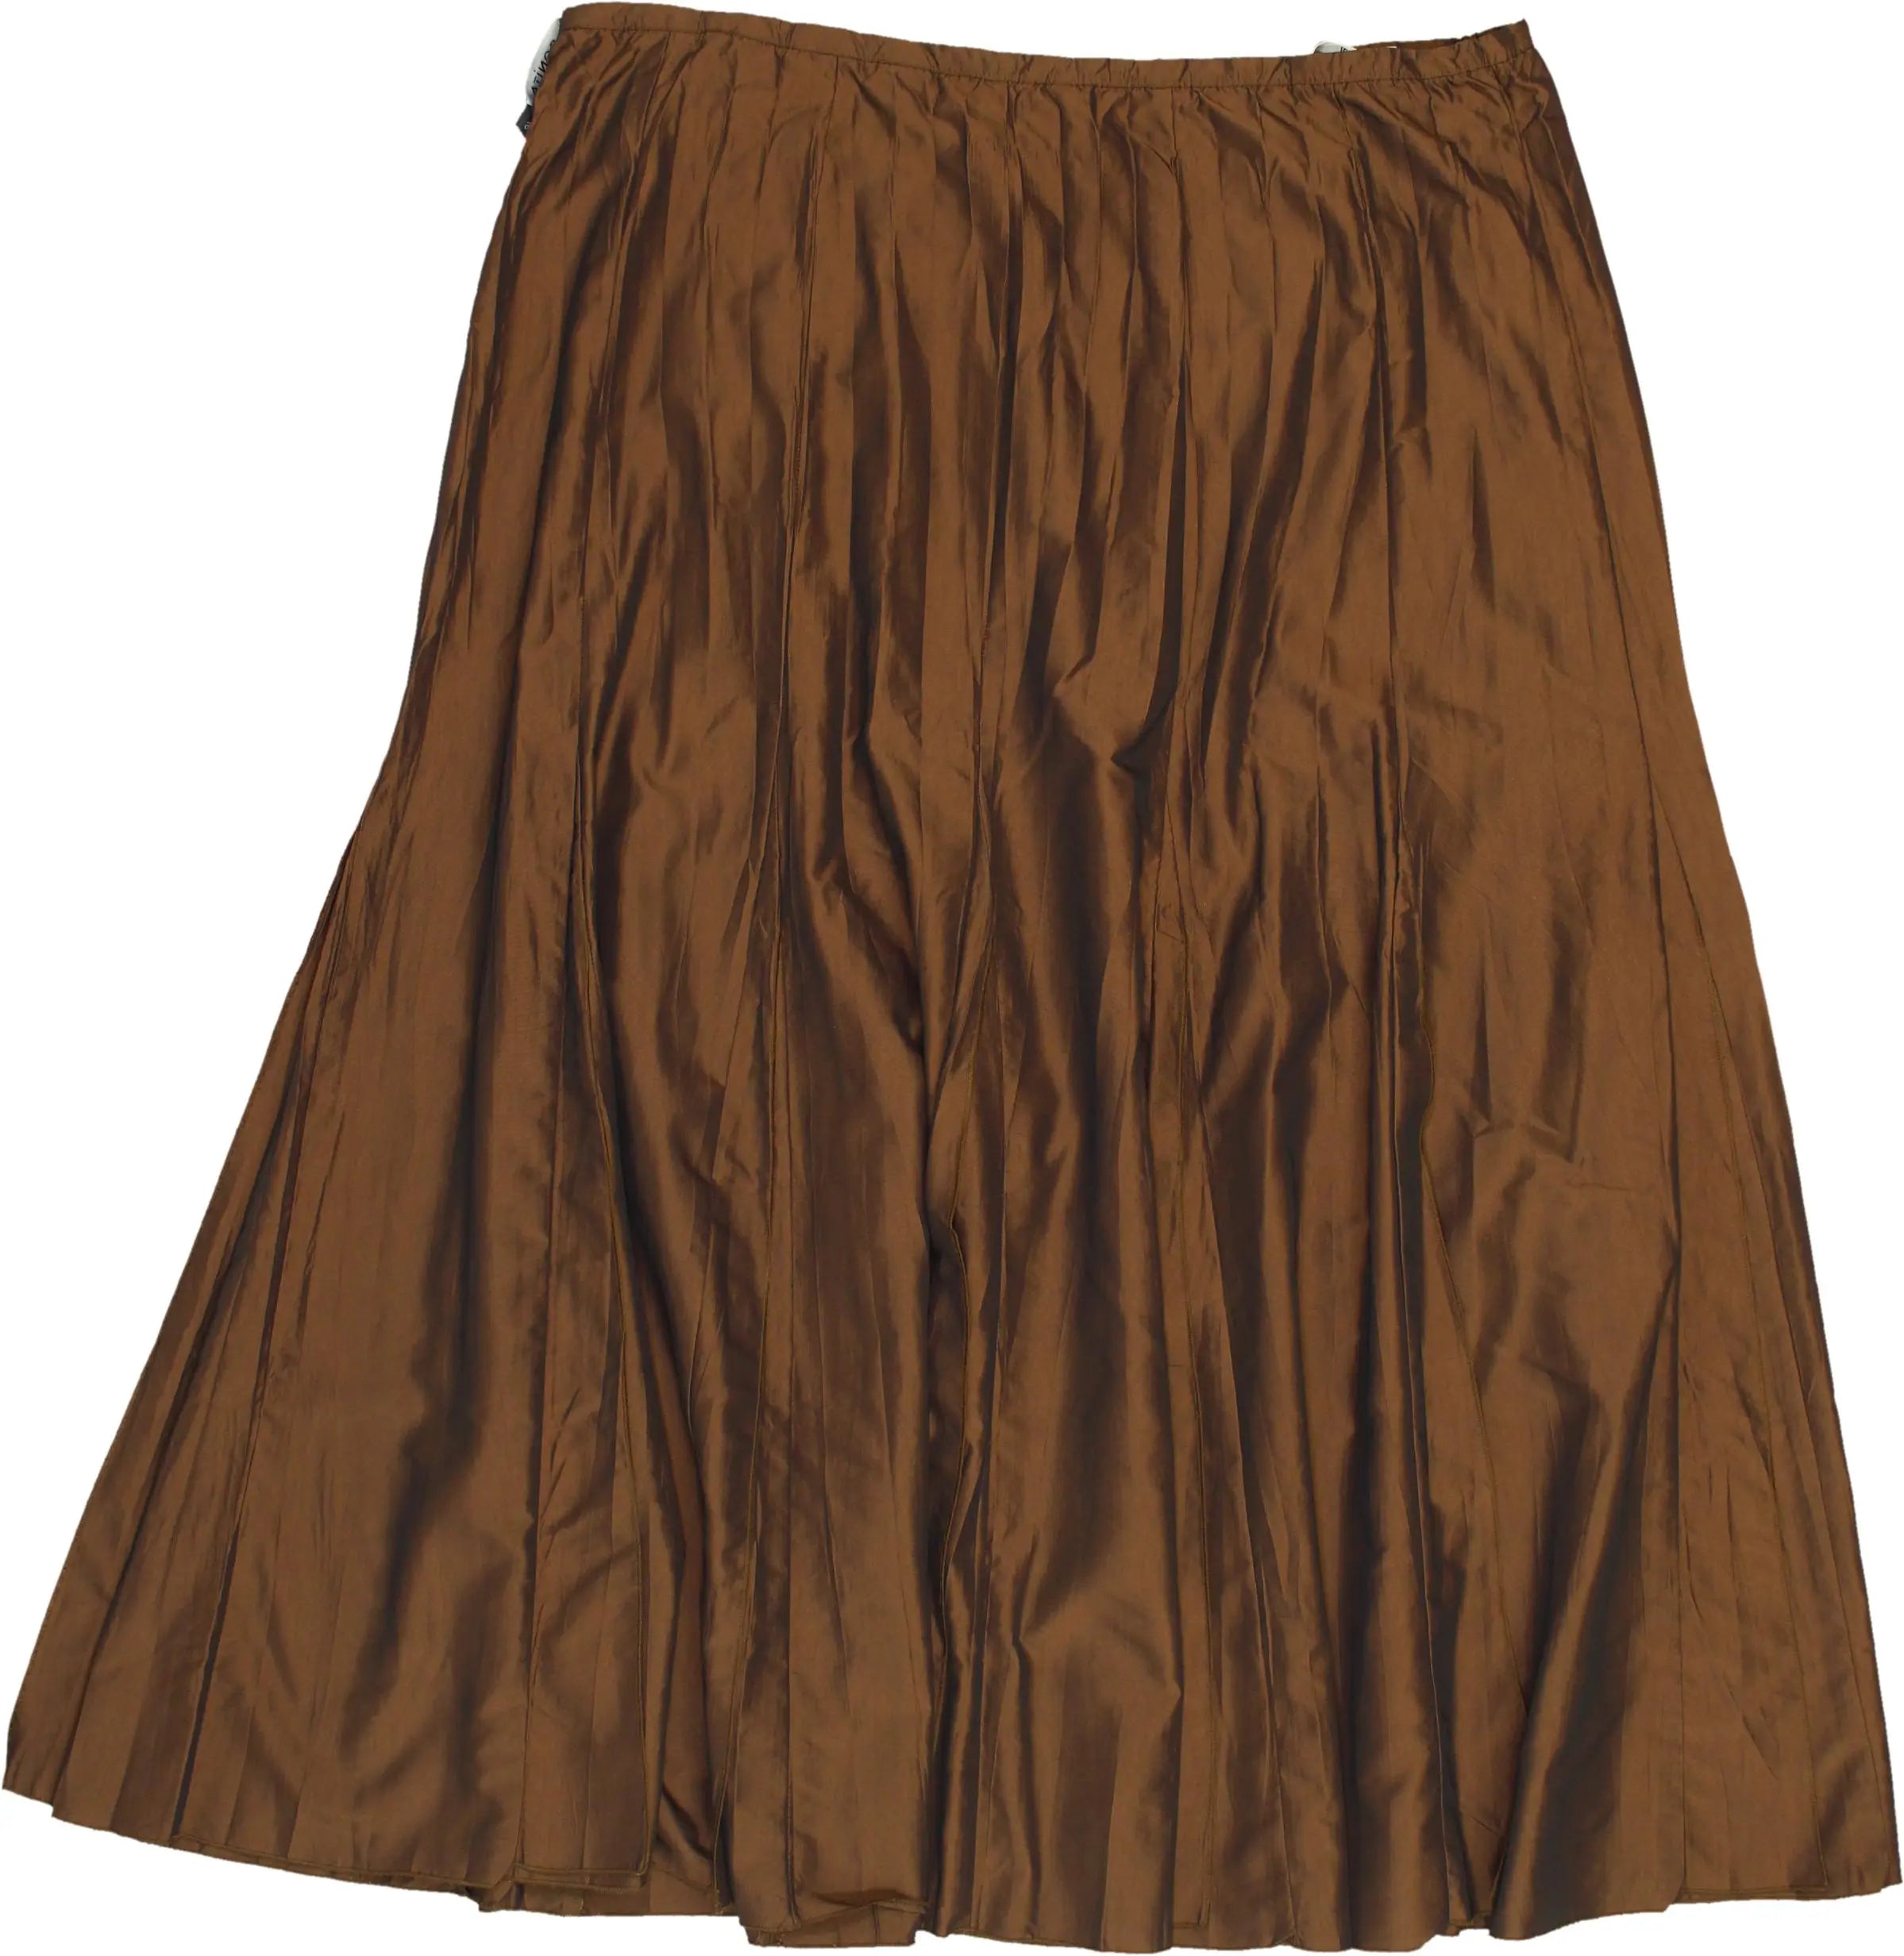 Bonita - Satin Shine Maxi Skirt- ThriftTale.com - Vintage and second handclothing